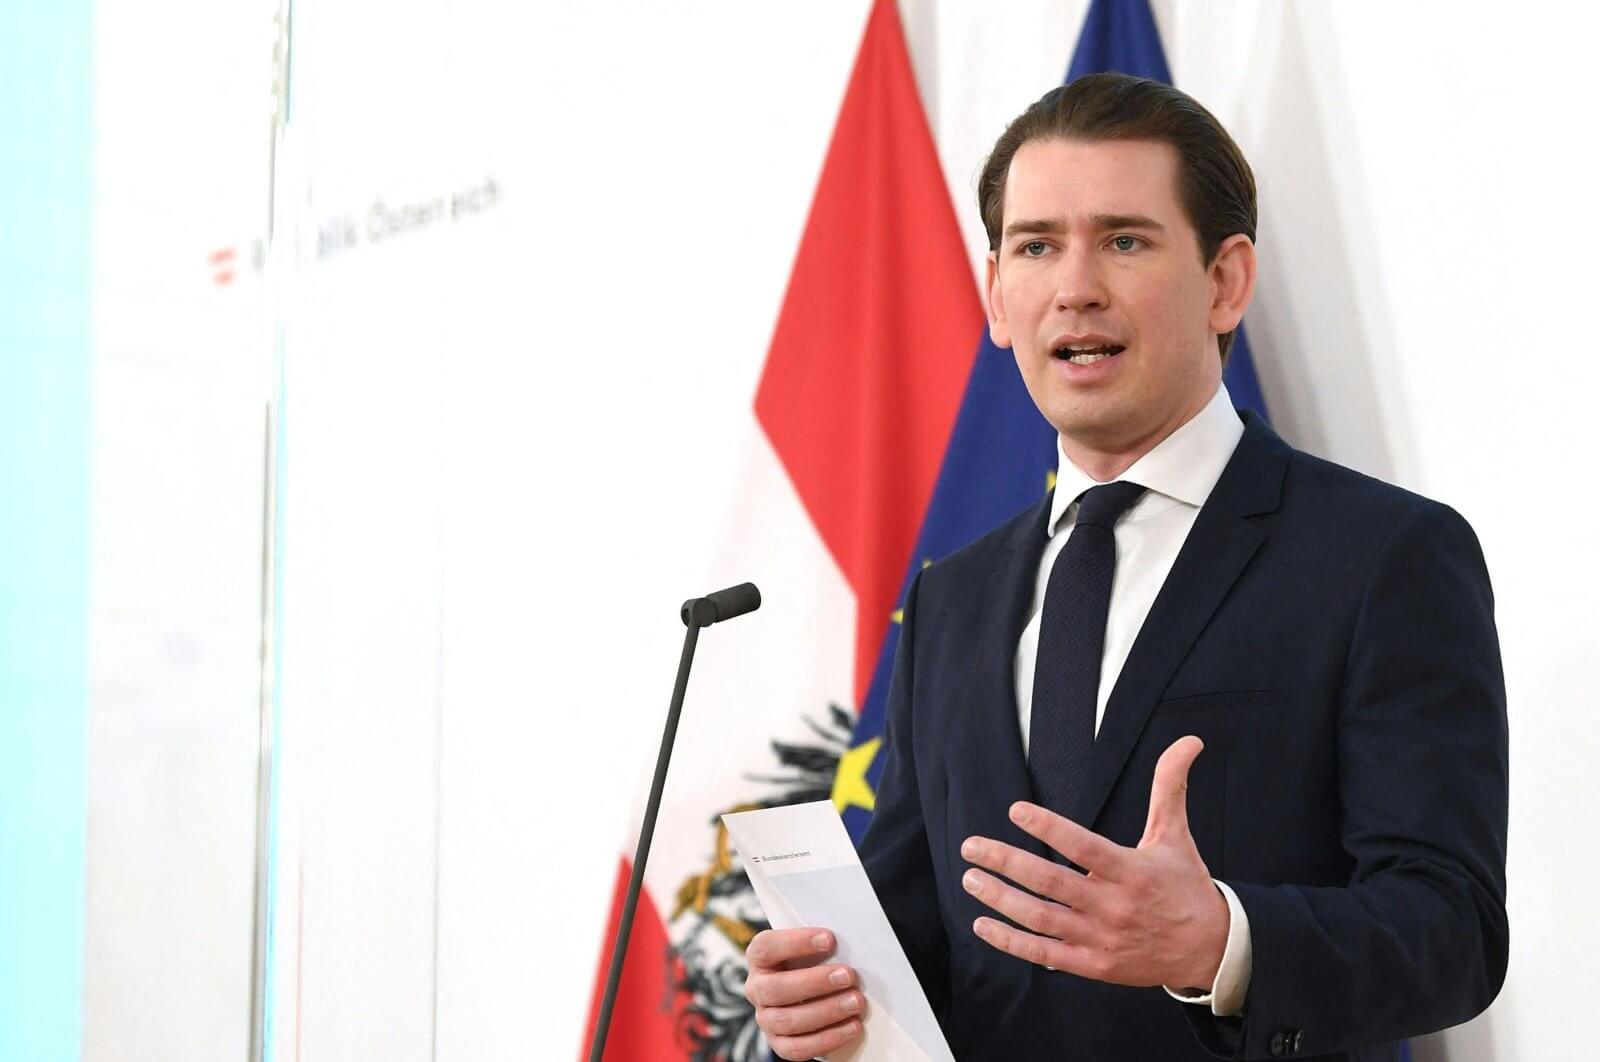 Austrian Chancellor Sebastian Kurz Admits to Being Investigated by Anti-Corruption Body